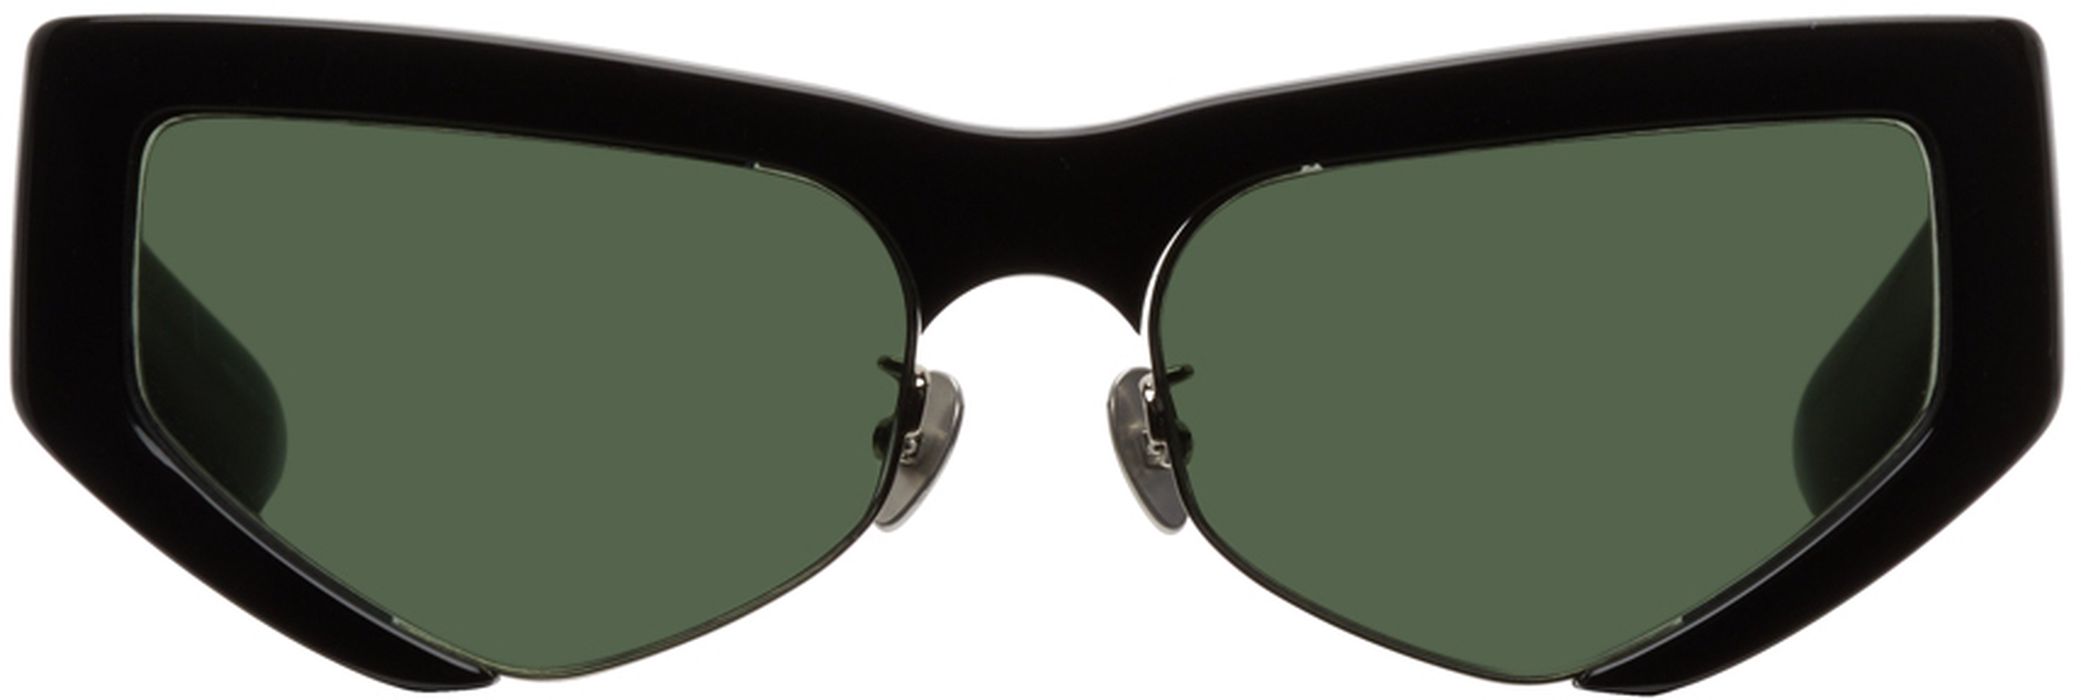 PROJEKT PRODUKT Black Rejina Pyo Edition RP-10 Sunglasses